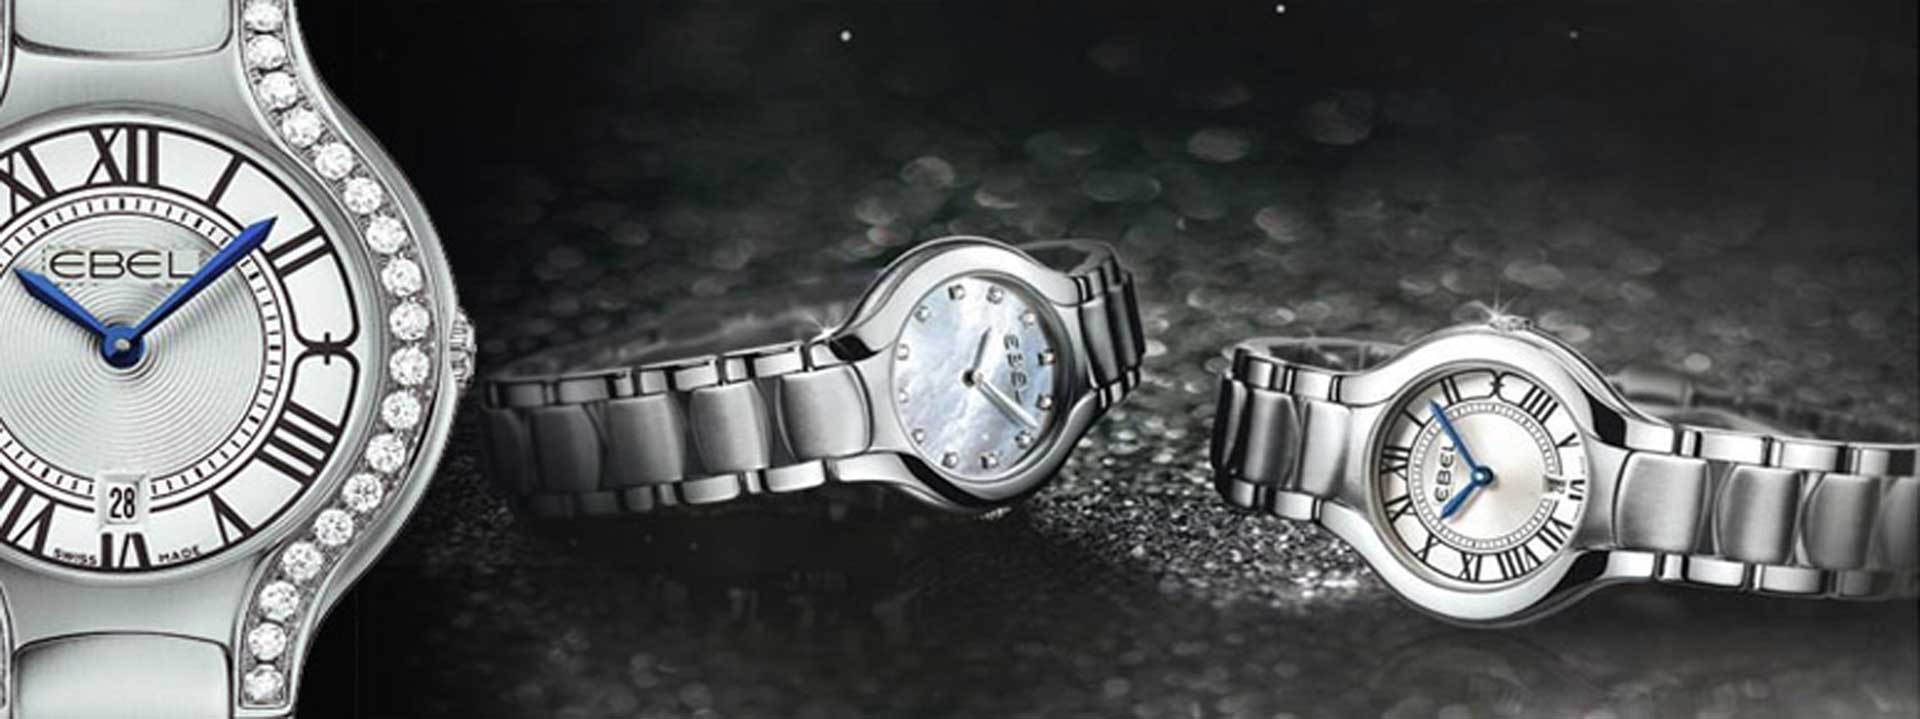 Laxmi Watch Company, Budhwar Peth, Near Datta Mandir, Shivaji Road, Pune | Watches Manufacturerr and Retailer